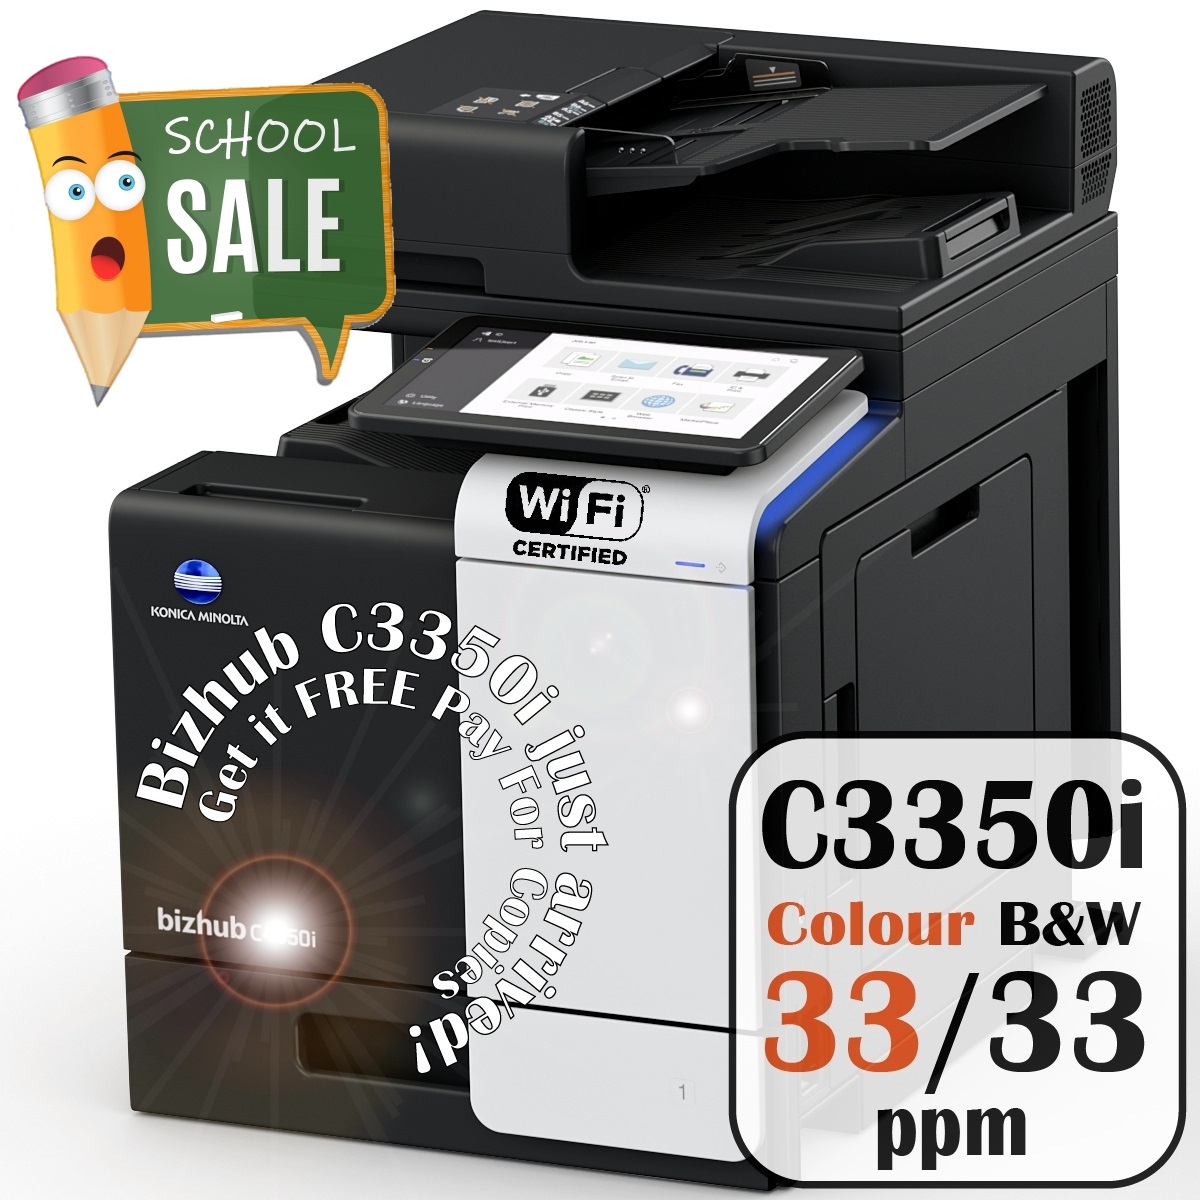 Konica Minolta Bizhub C3350i Colour Copier Printer Rental Price Offers